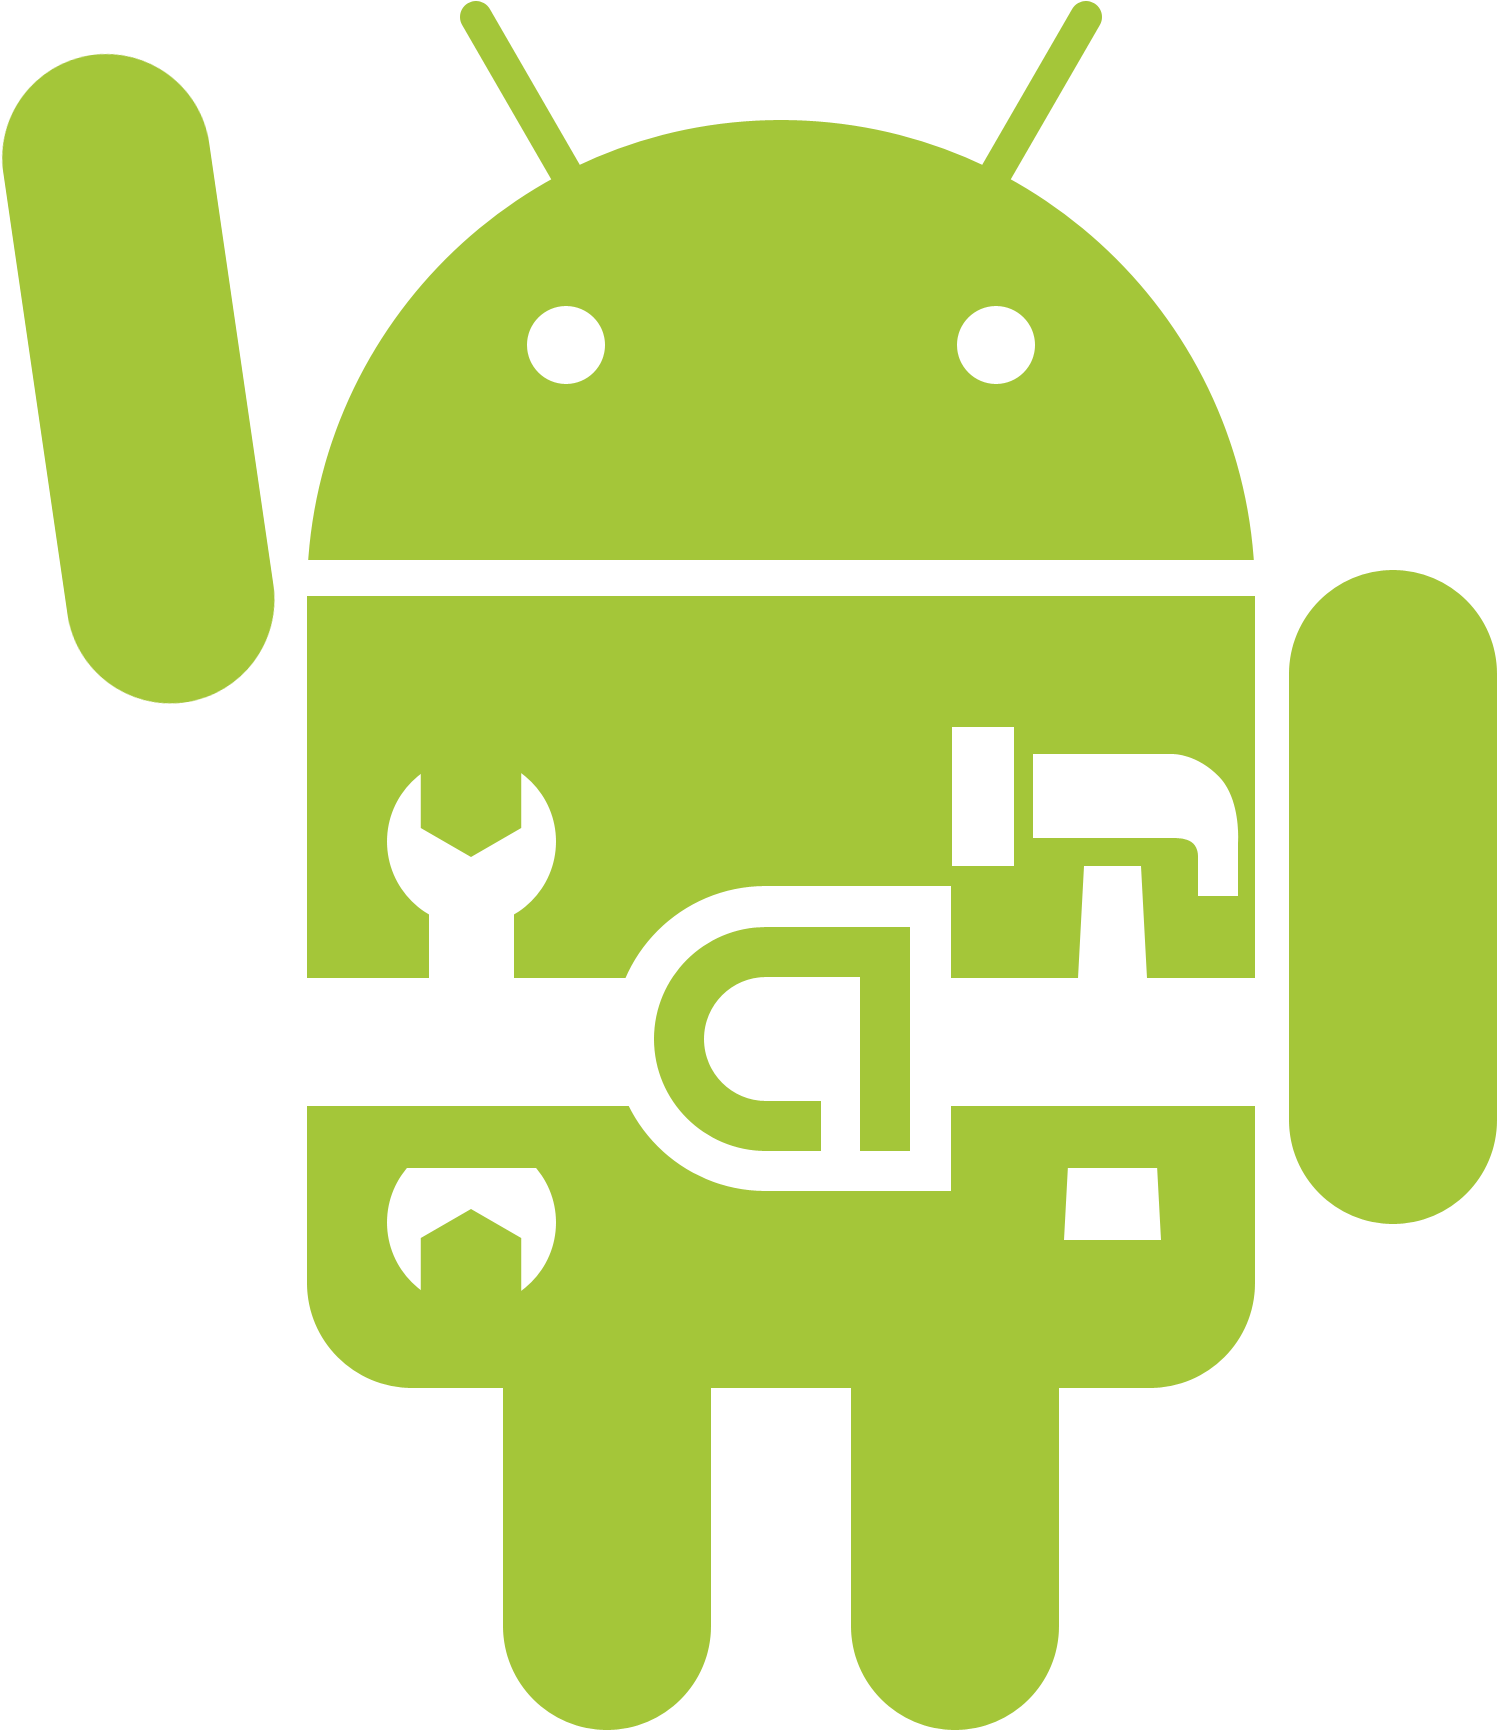 Android года выпуска. Эмблема андроид. Иконка Android. Андроид без фона. Значок Android без фона.